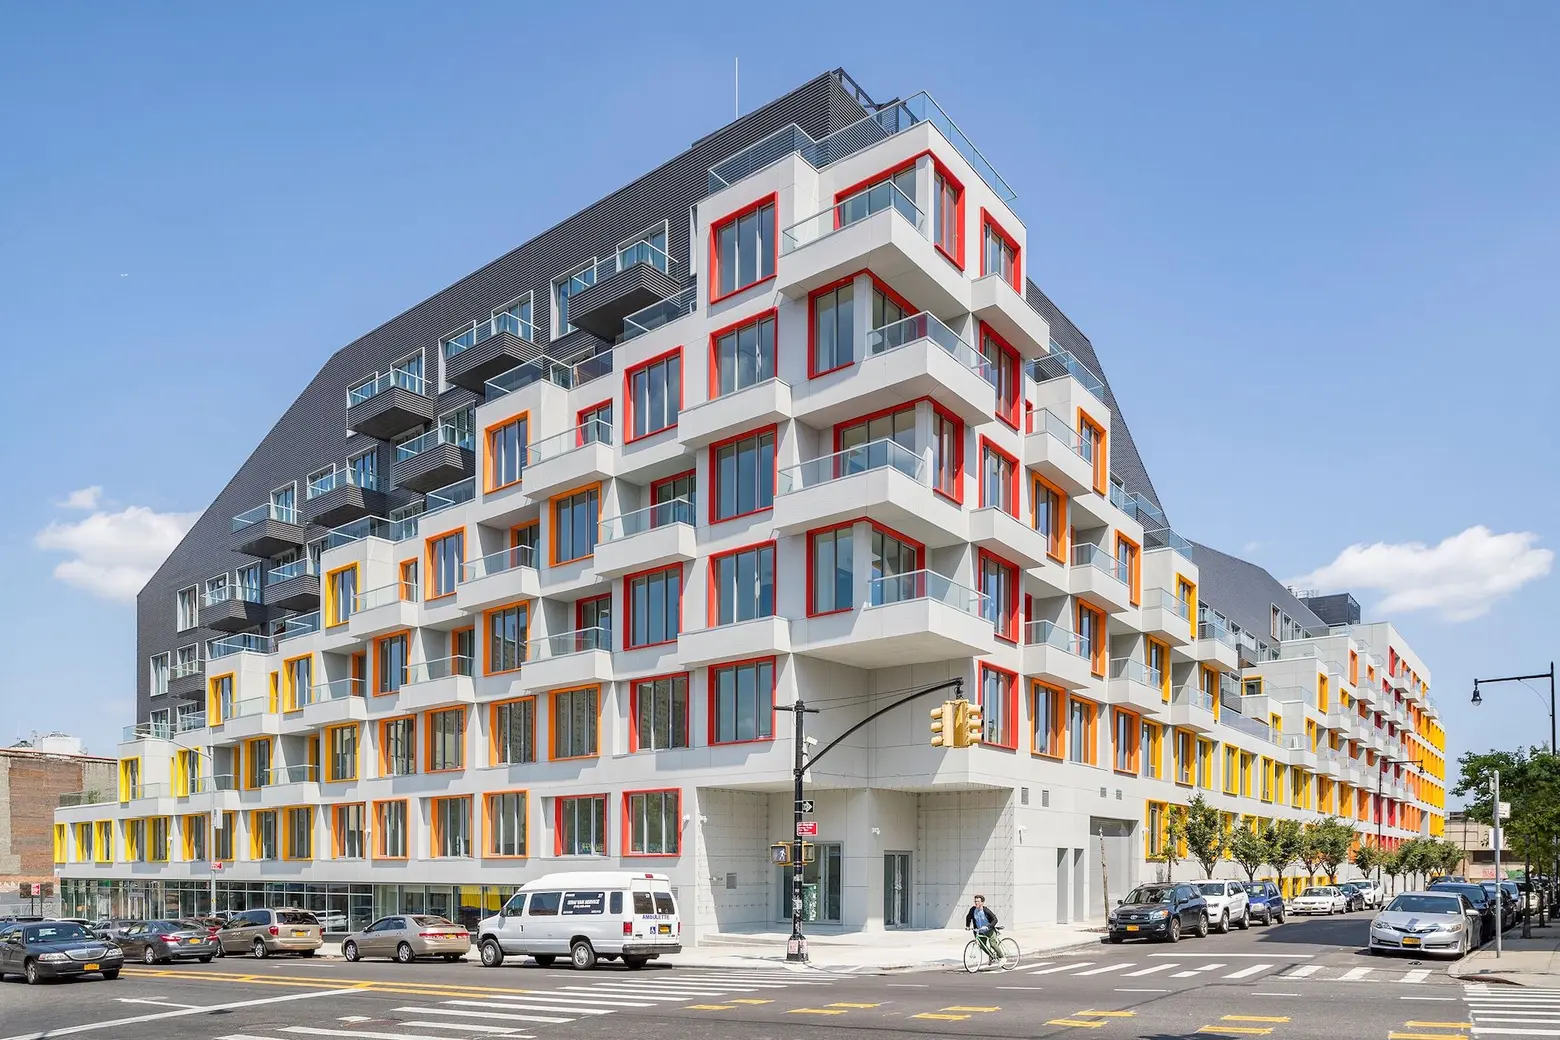 New photos of ODA’s Bushwick rental highlight its sloping, sunset-hued facade